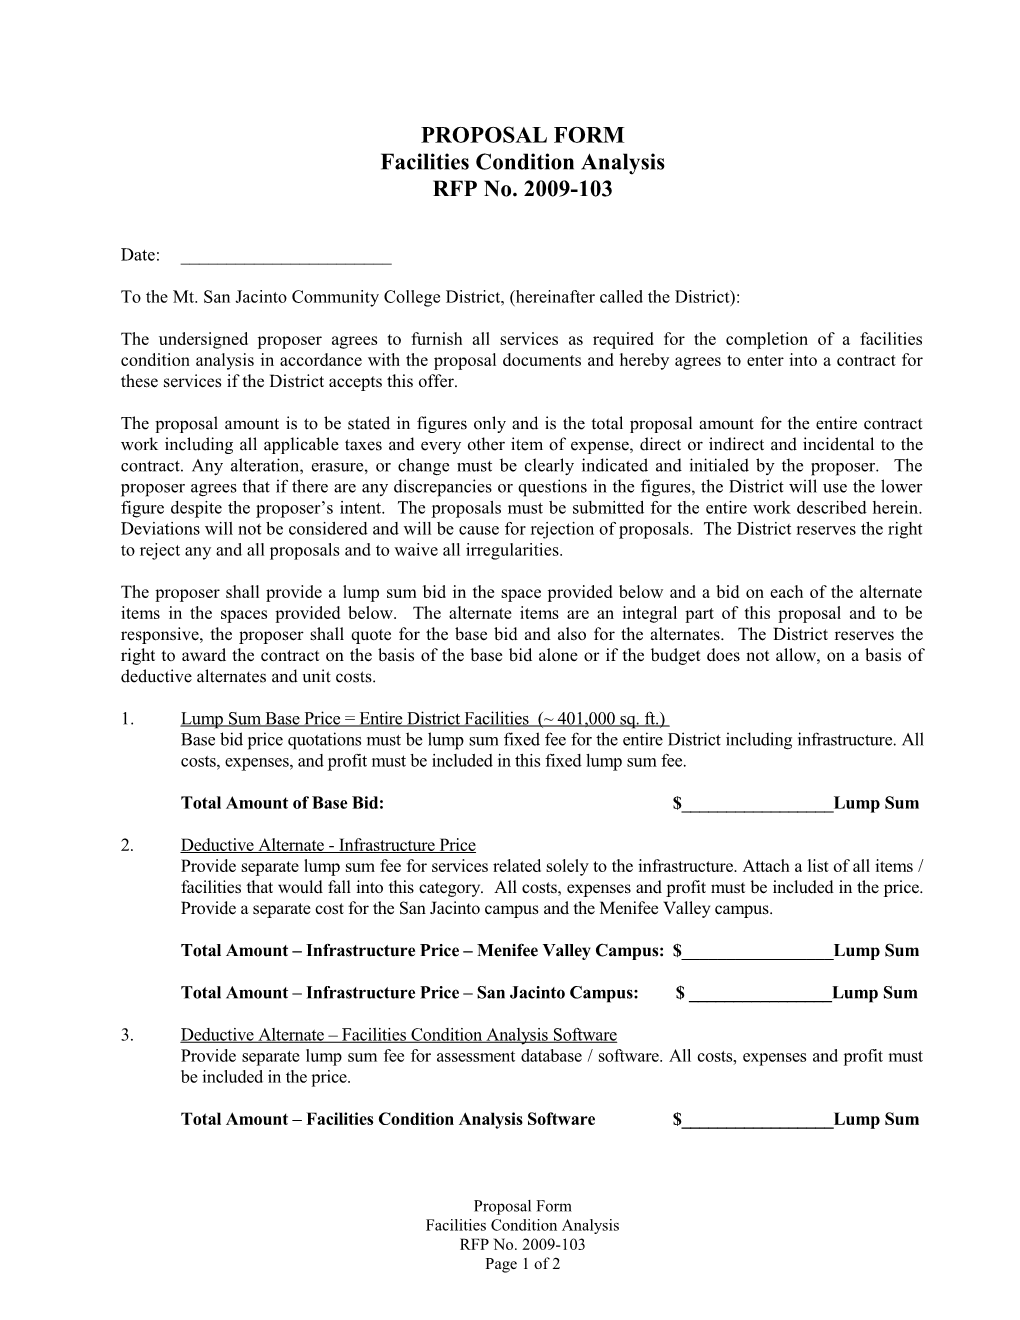 2009-103; RFP Proposal Form